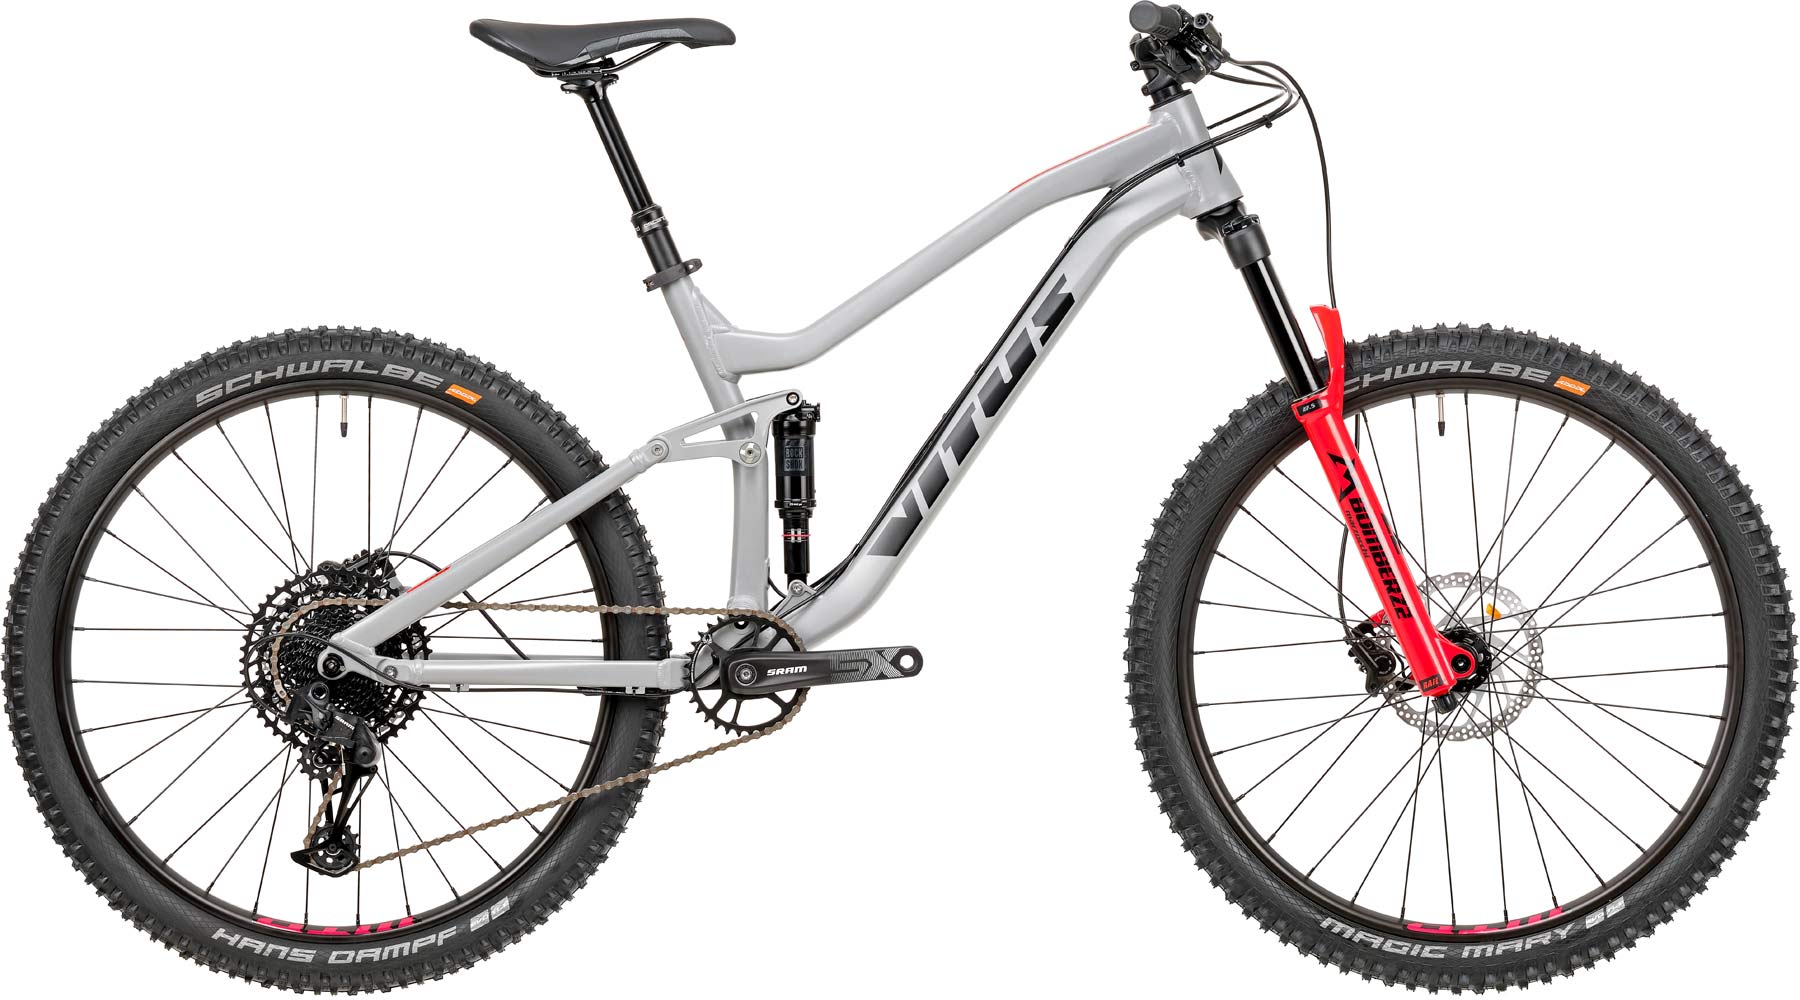 2020 Vitus Mythique trail bike, affordable aluminum alloy aluminium trail mountain bike, 130mm or 140mm travel, 27.5